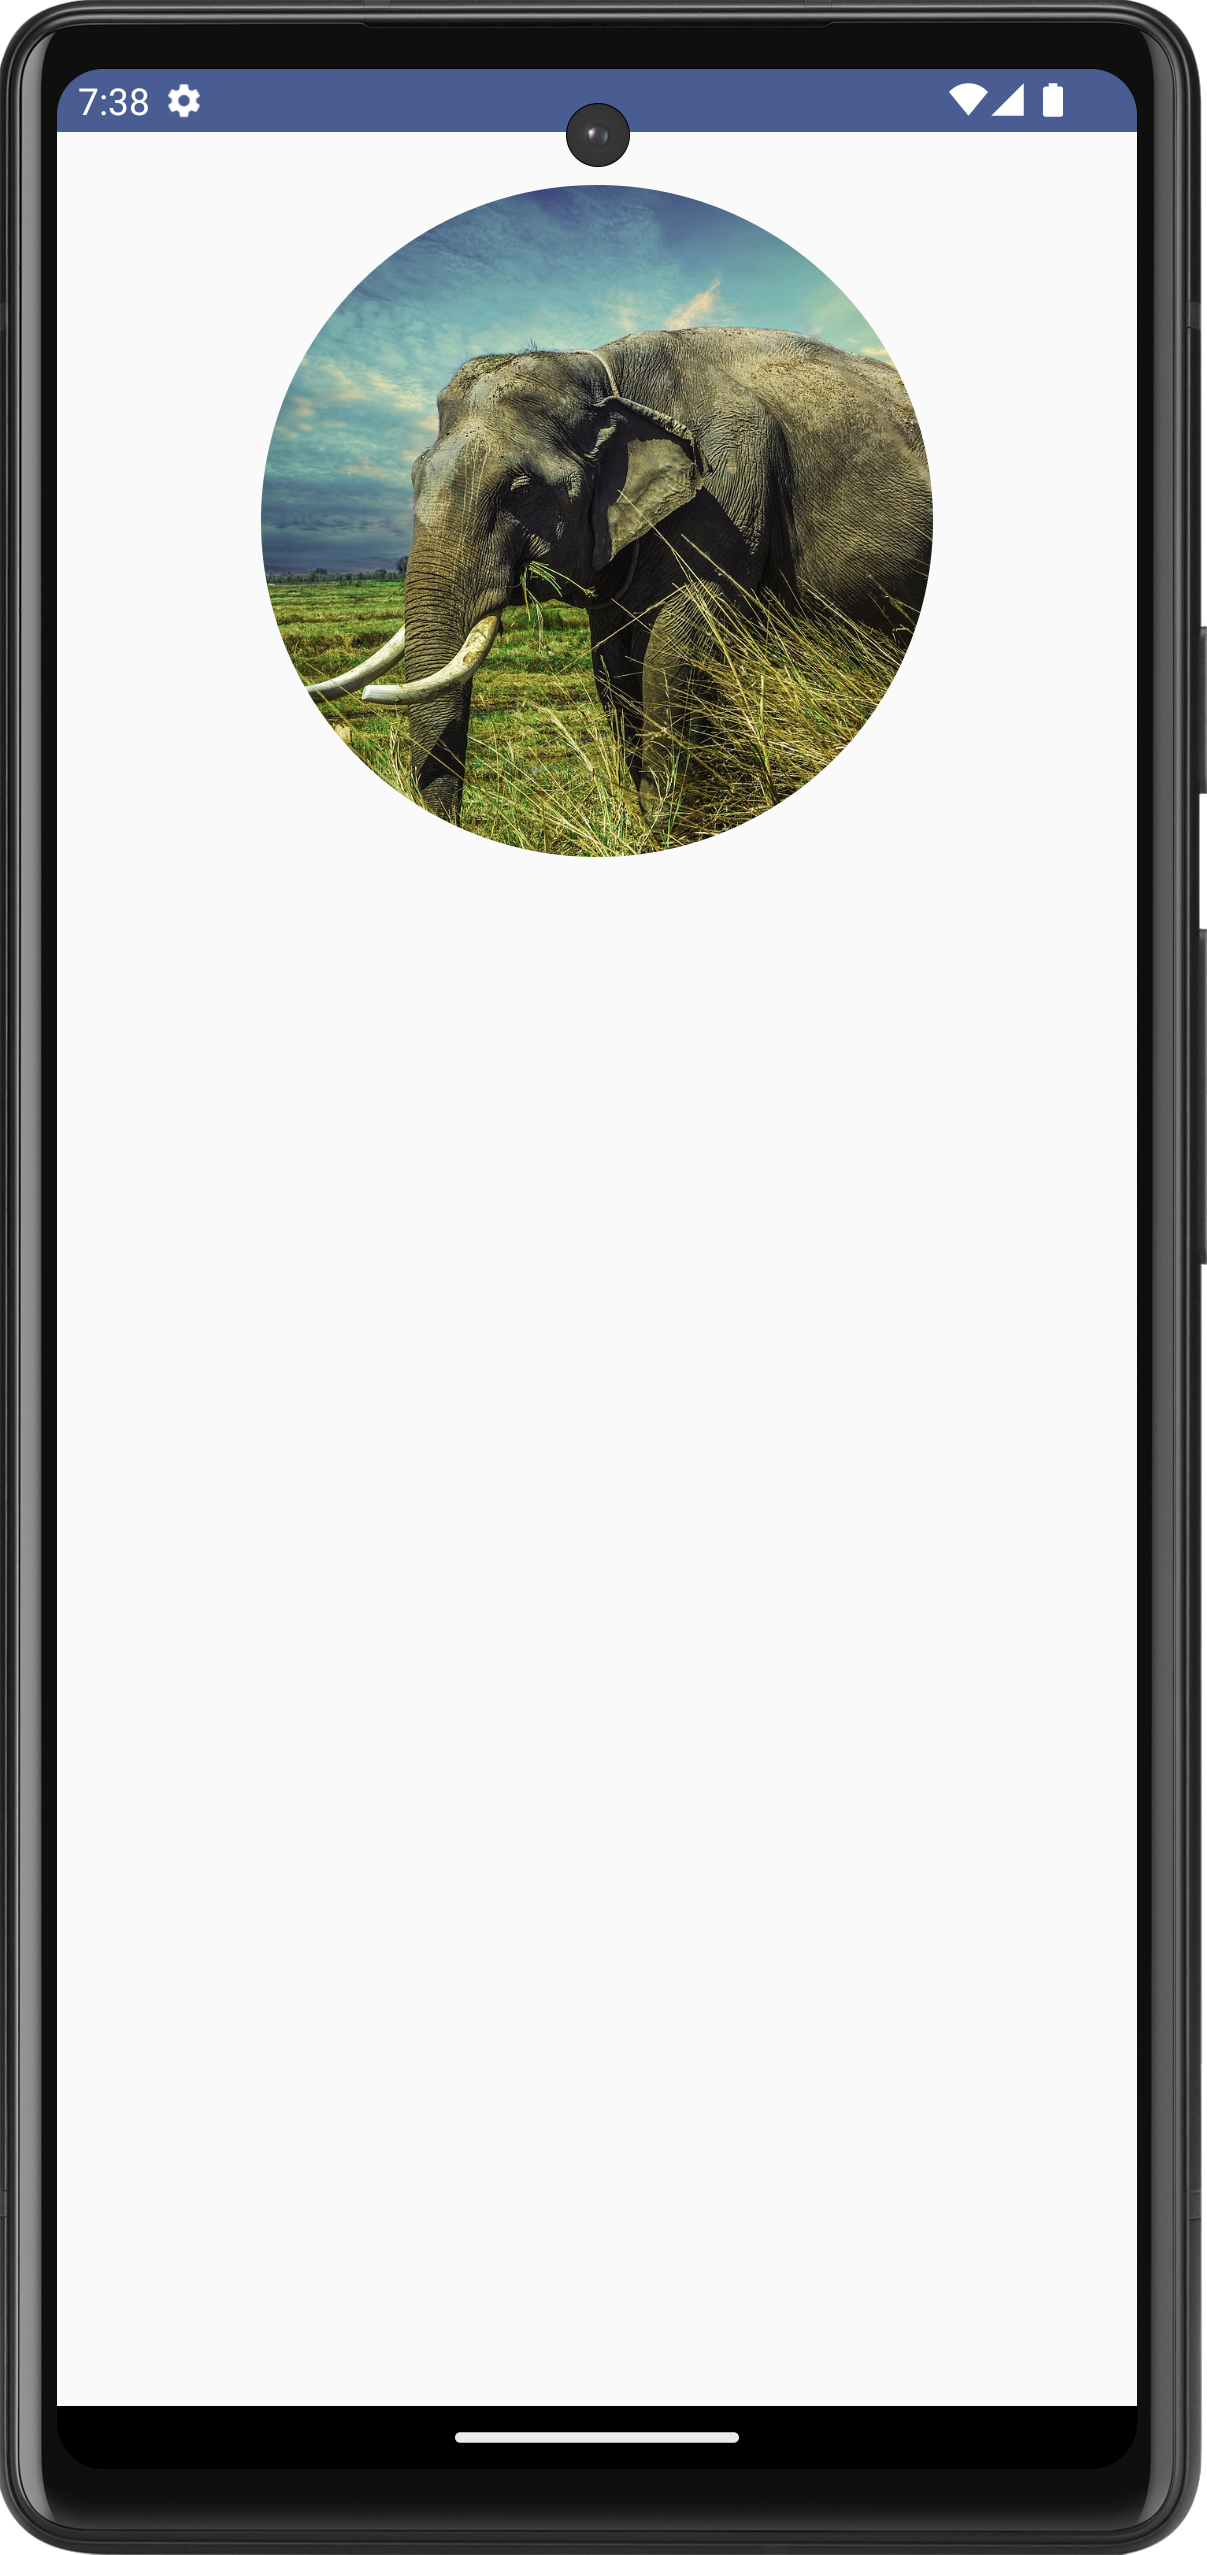 Android Jetpack Compose - Circular Image